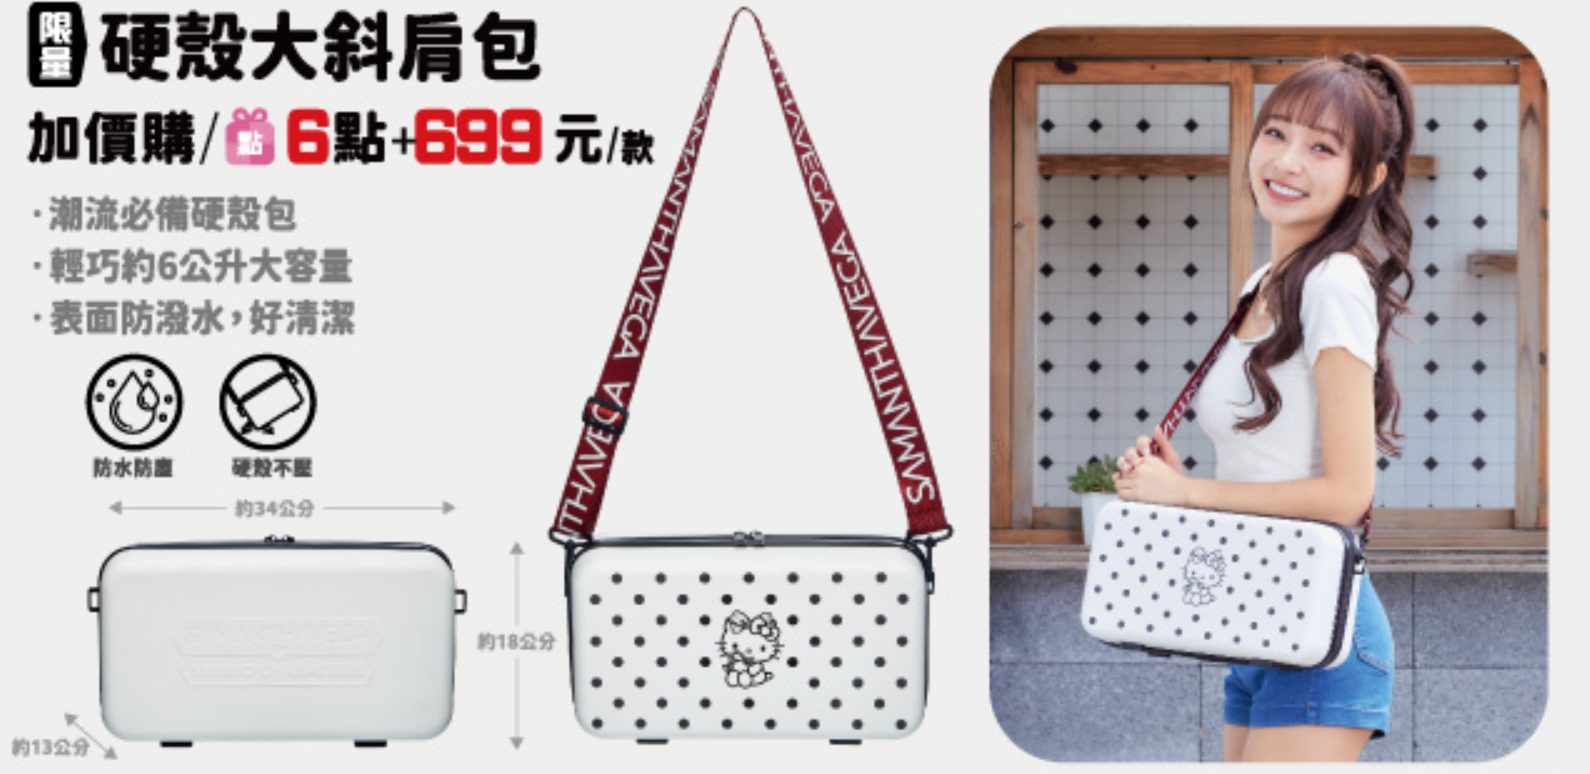 Sanrio Mini Shoulder Bag - Hello Kitty